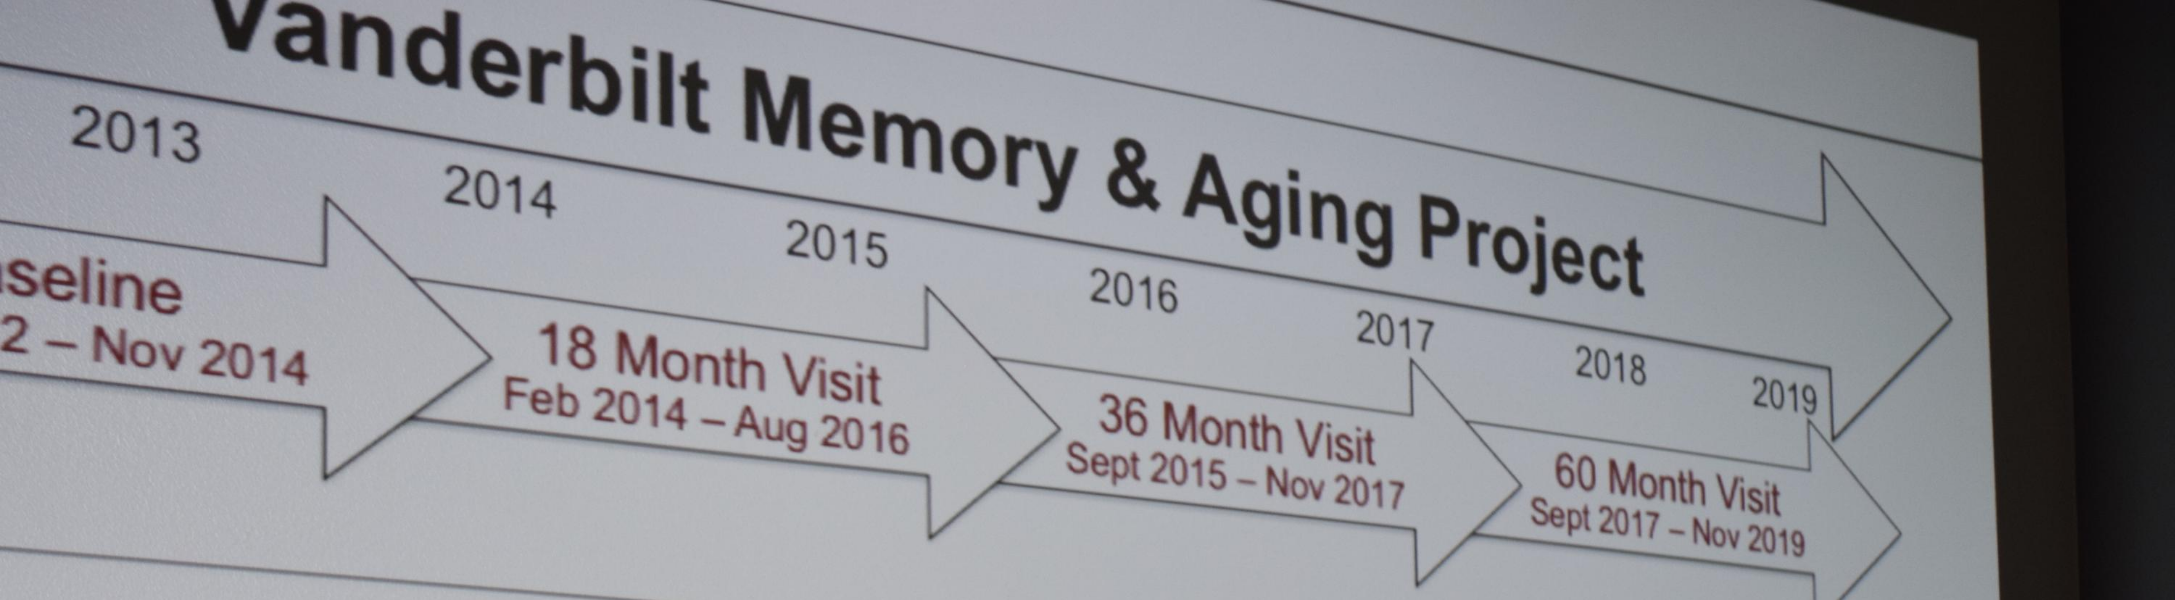 Vanderbilt Memory & Aging Project